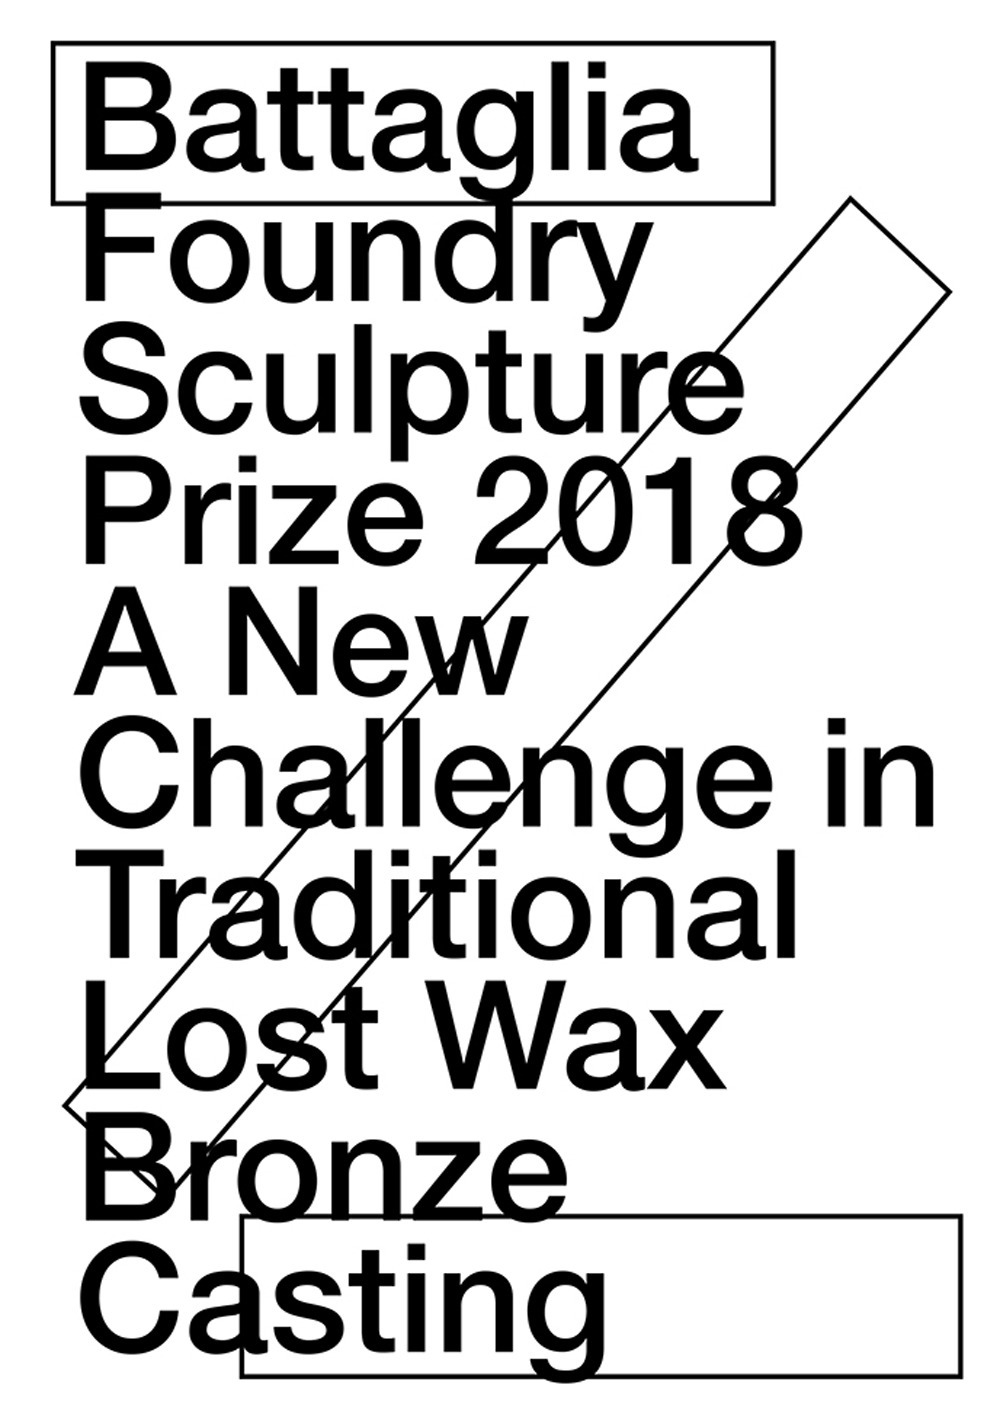 Battaglia foundry sculpture prize 2018. A new challenge in traditional lost wax bronze casting